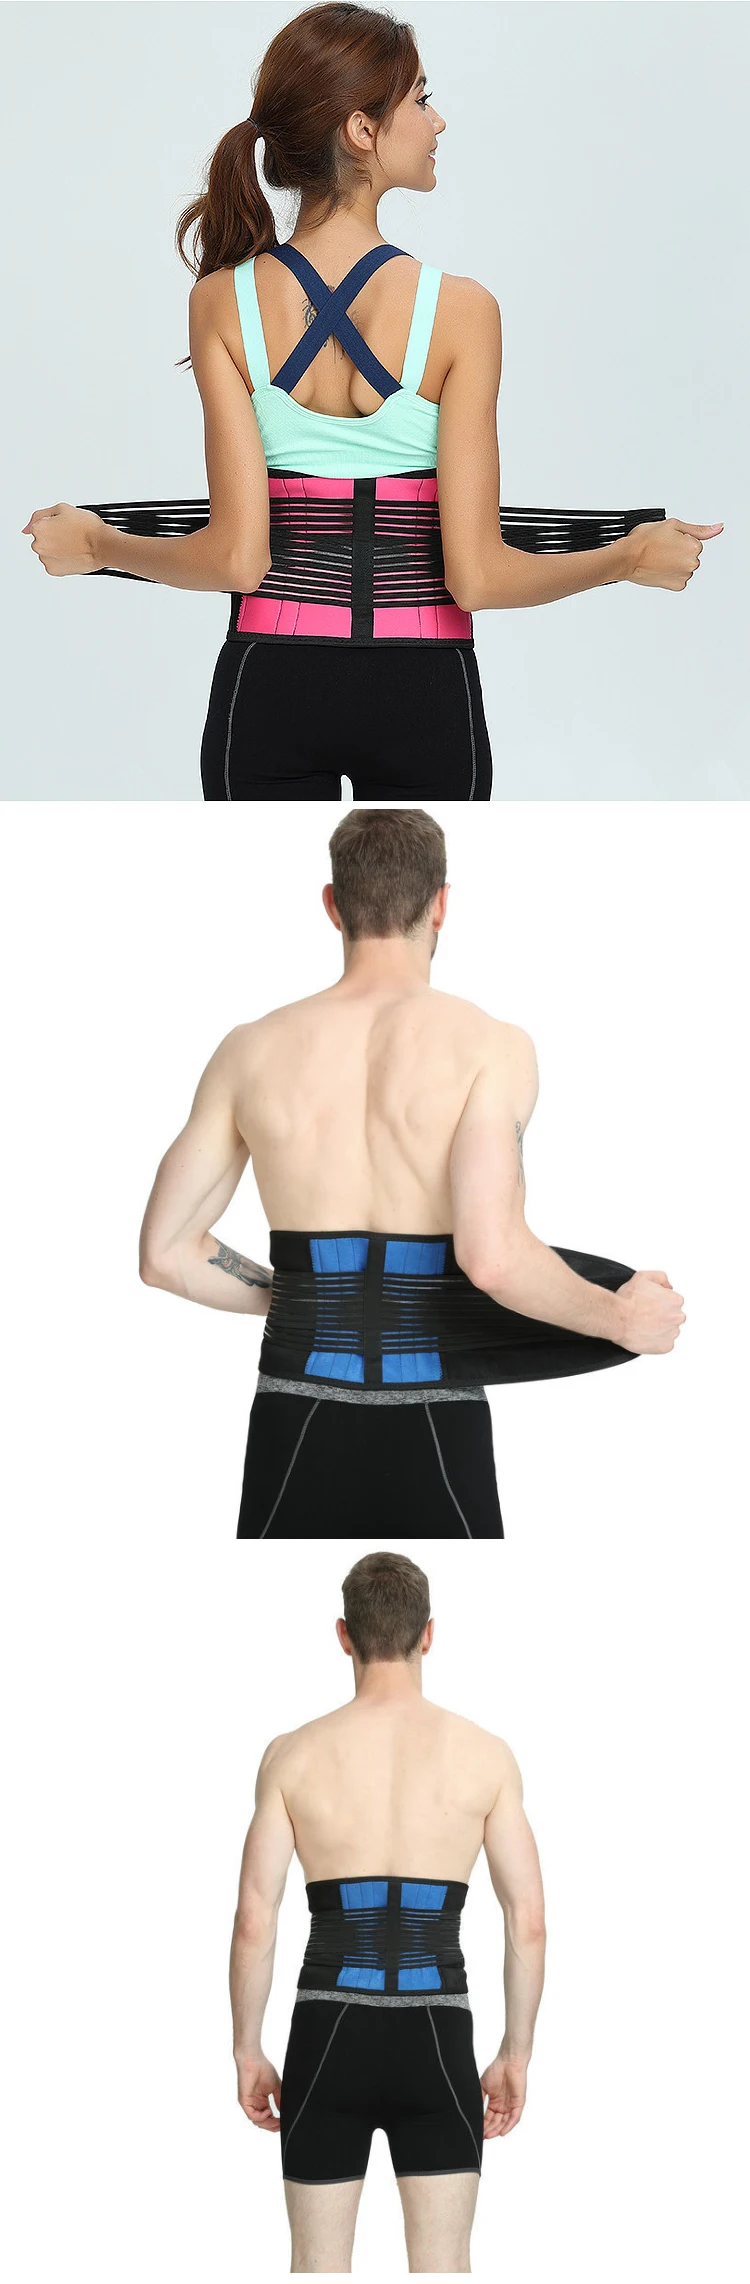 Enerup Latex Waist Back Posture Corrector Support Belt Waist Shaper Trainer Corset Trimmer Private Label